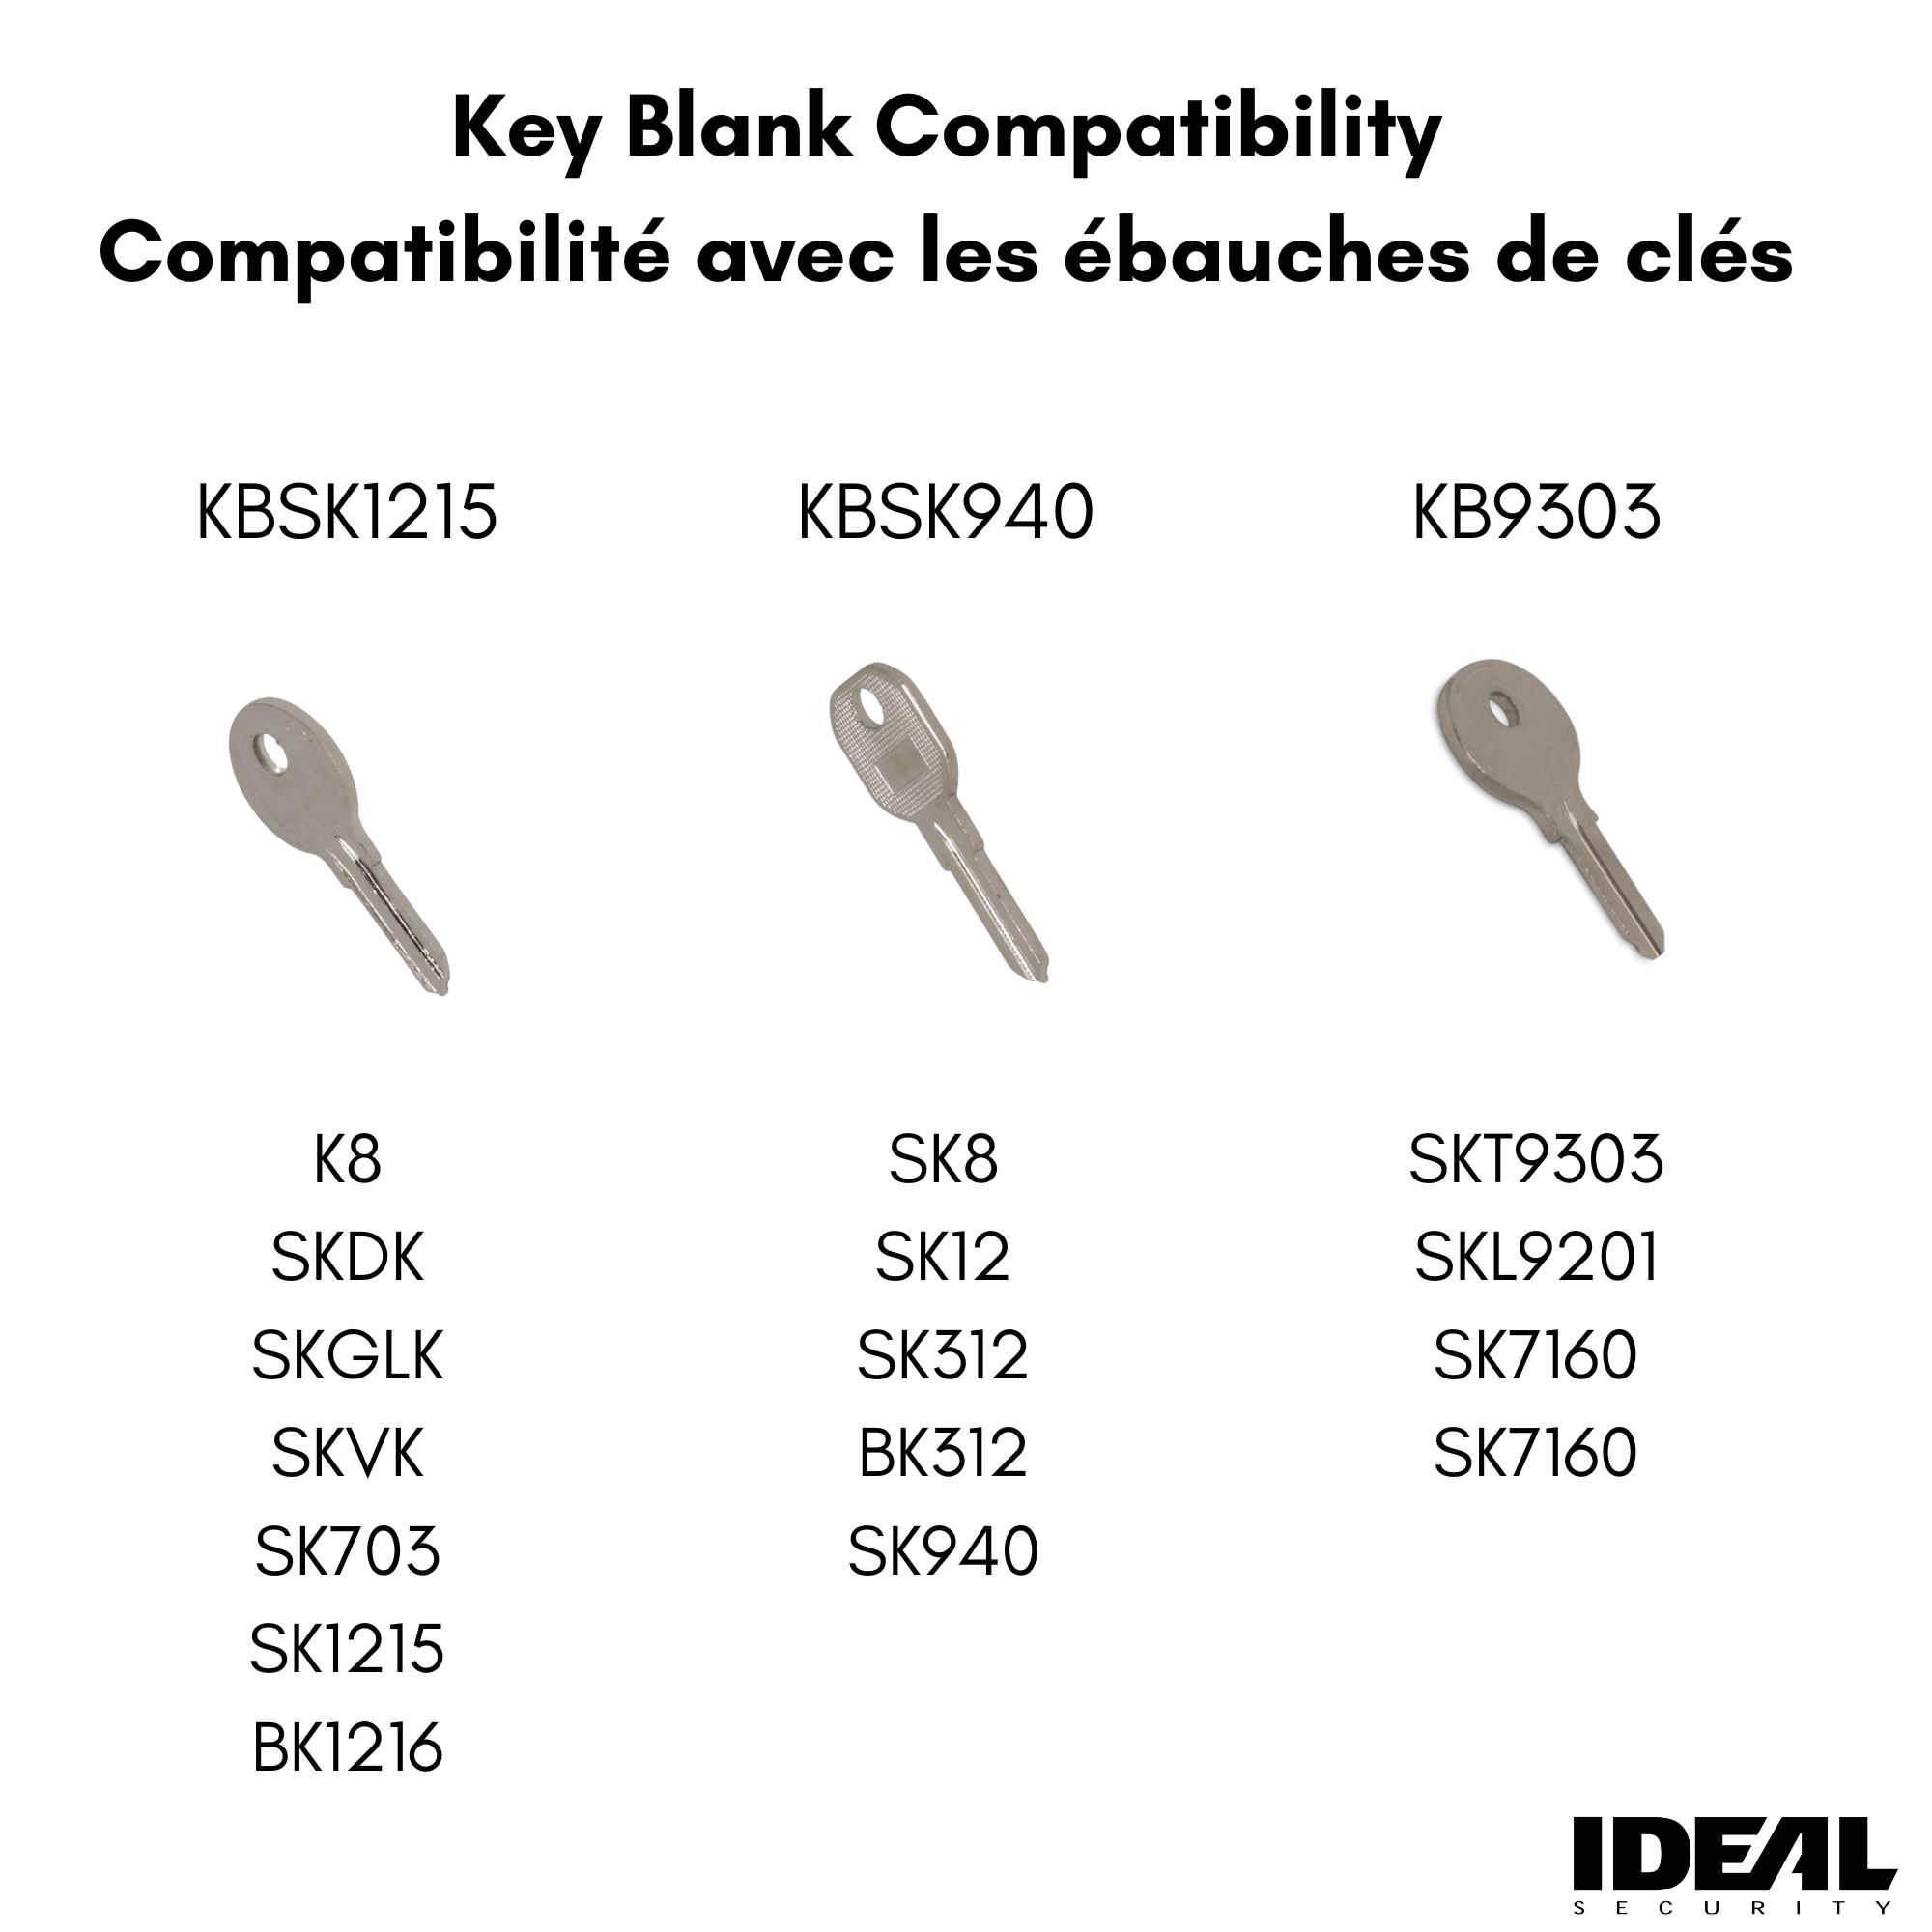 Key Blank For GLK, HK01, 1215, 1216, DX, VK, 703, 800K, 801